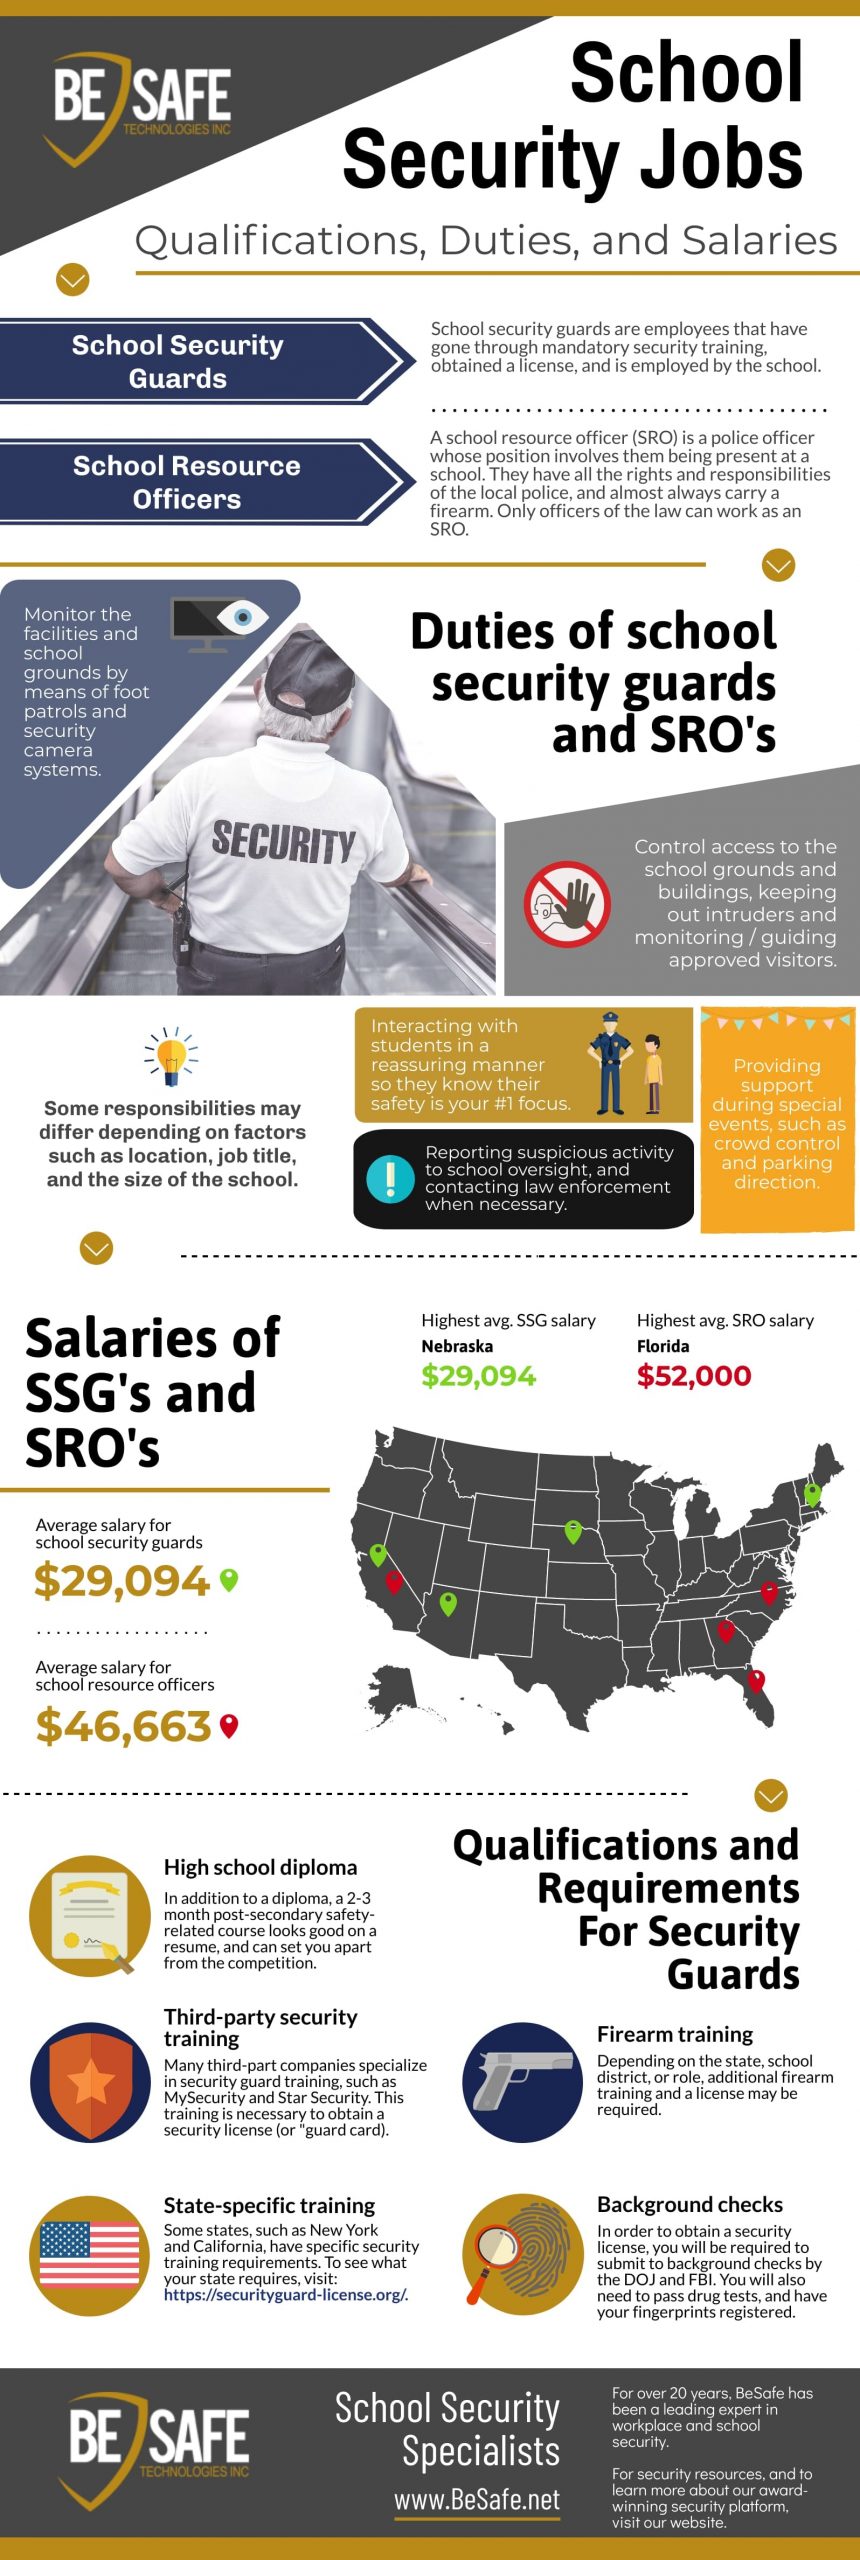 security guard jobs and training, security guard salaries